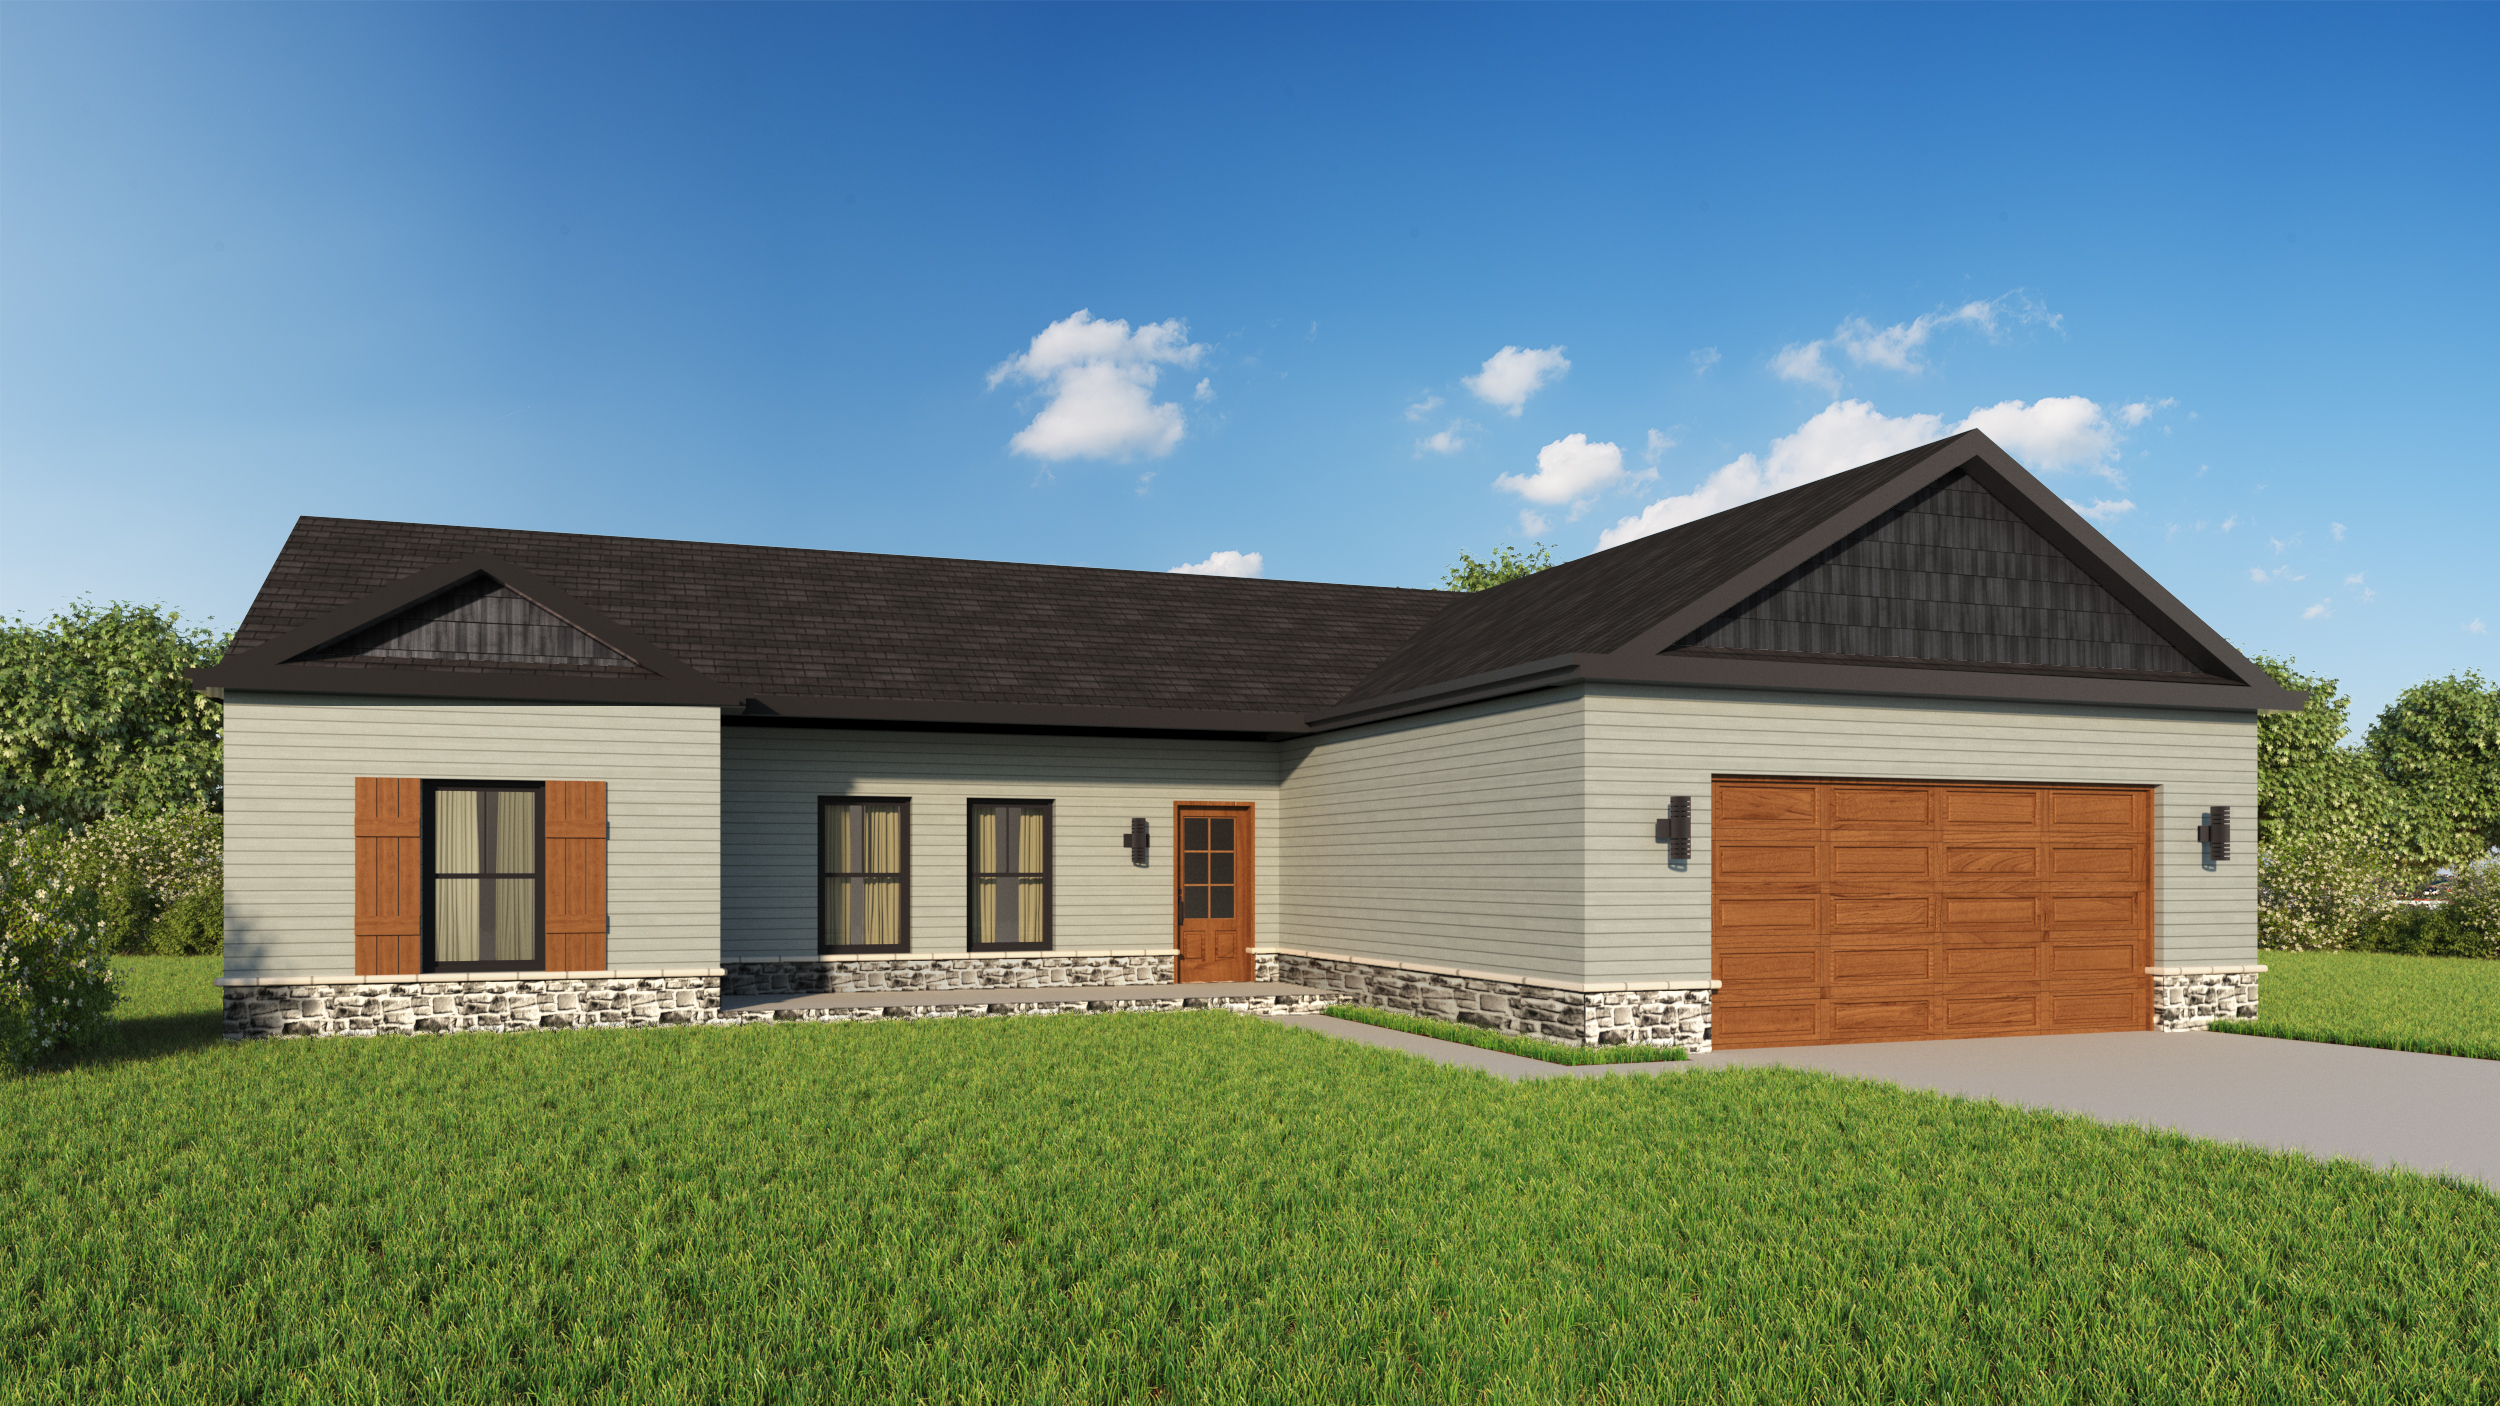 Florence - Dave Hobba Builder - Ranch Plan - West Virginia - Custom Home Builder - Kentucky - Inventory Home - New Construction - 2022 - 2023.jpg 1668021475121